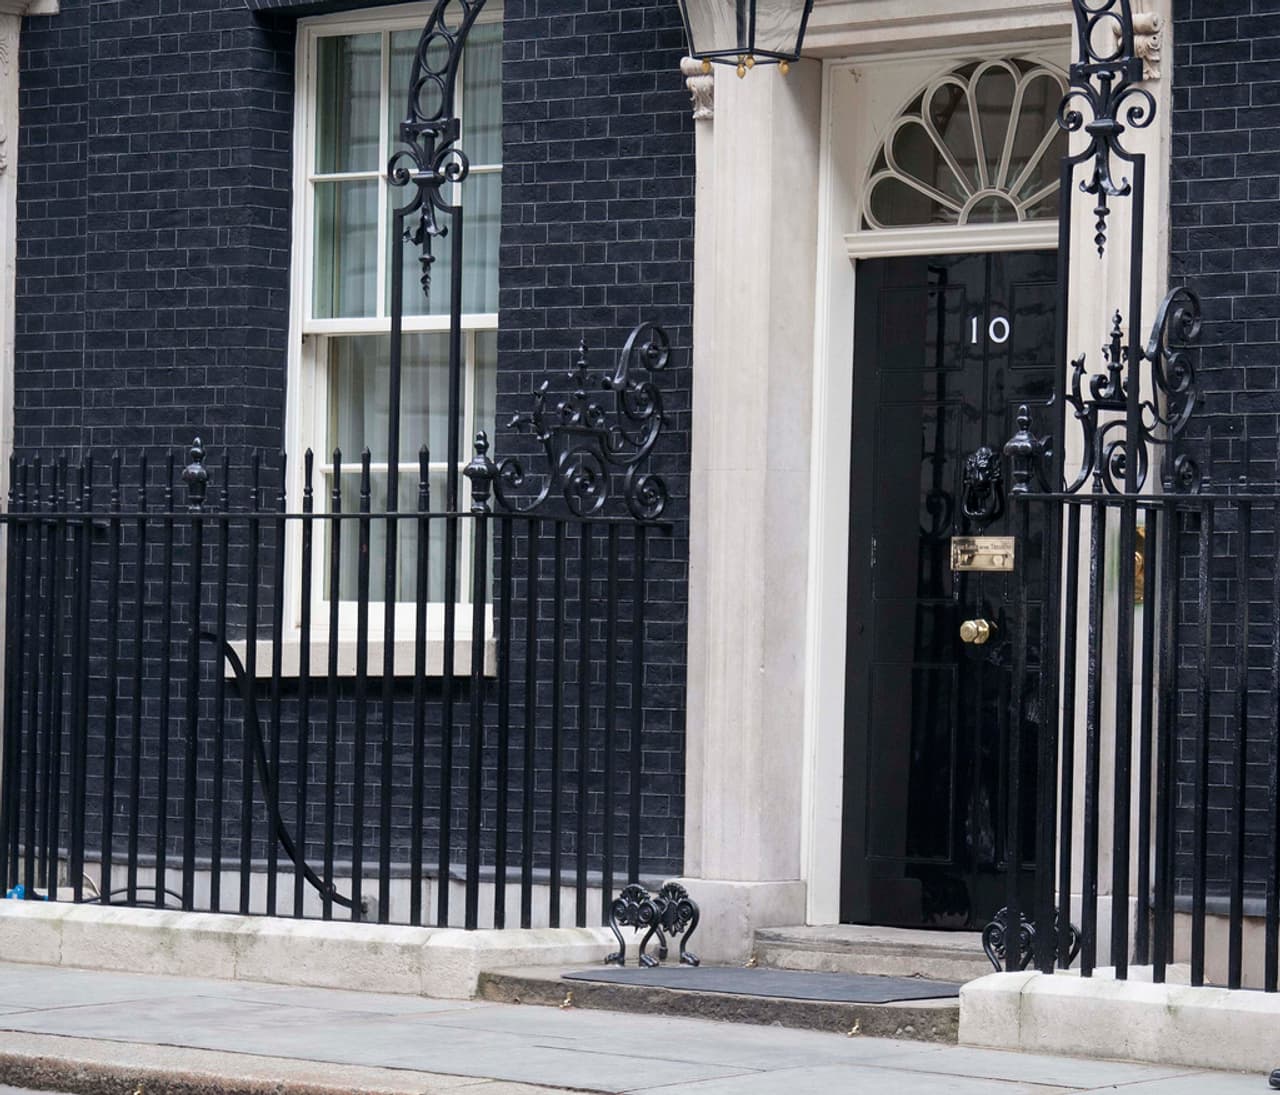 Image of 10 Downing Street, London